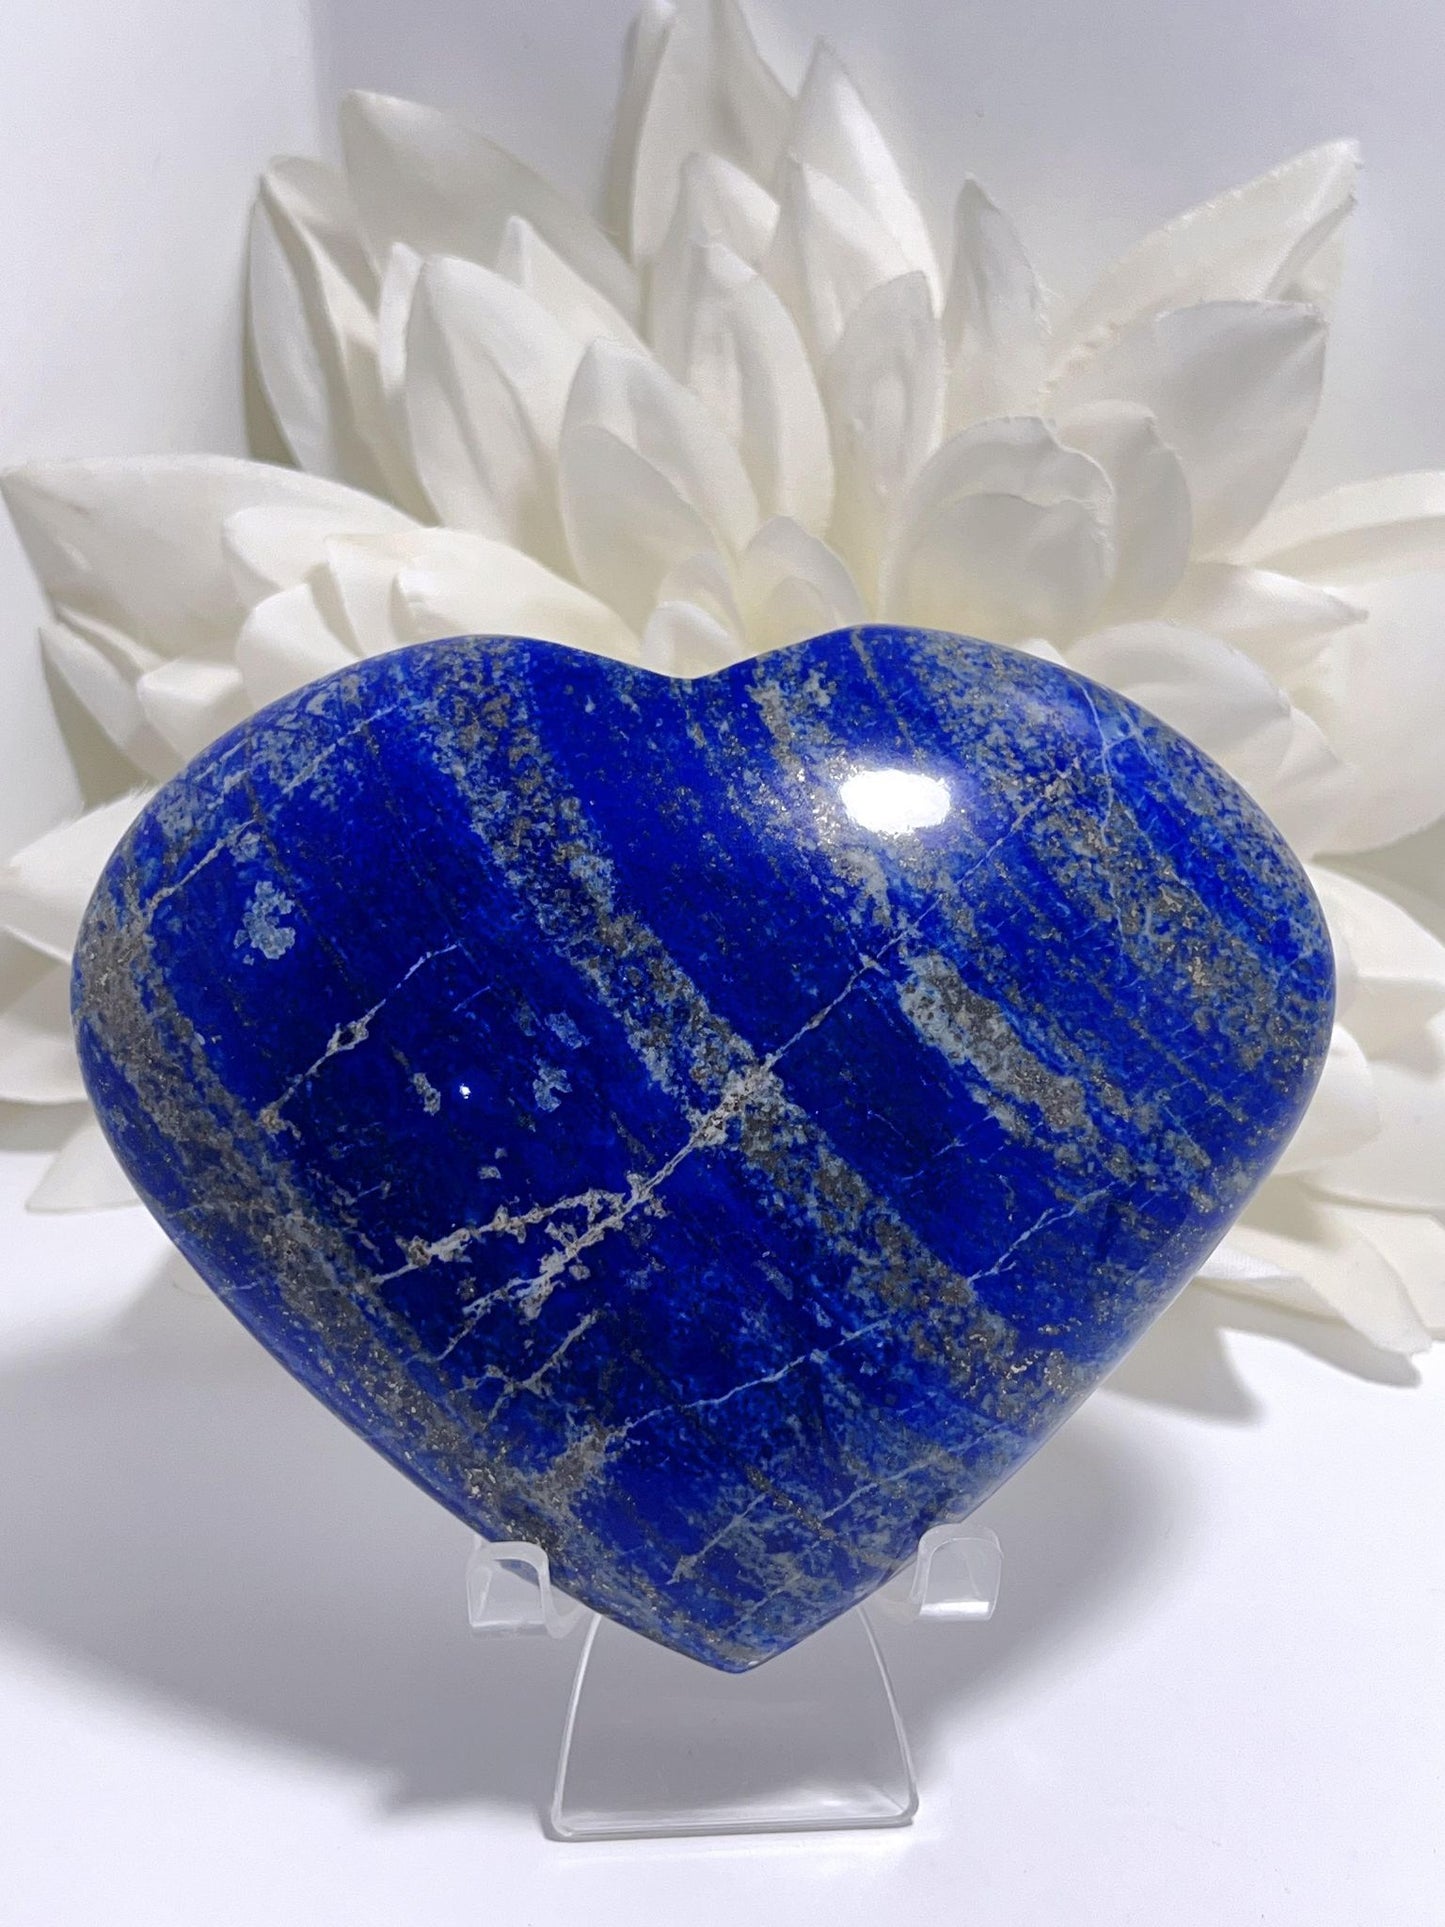 Lapis Lazuli Heart 1302g